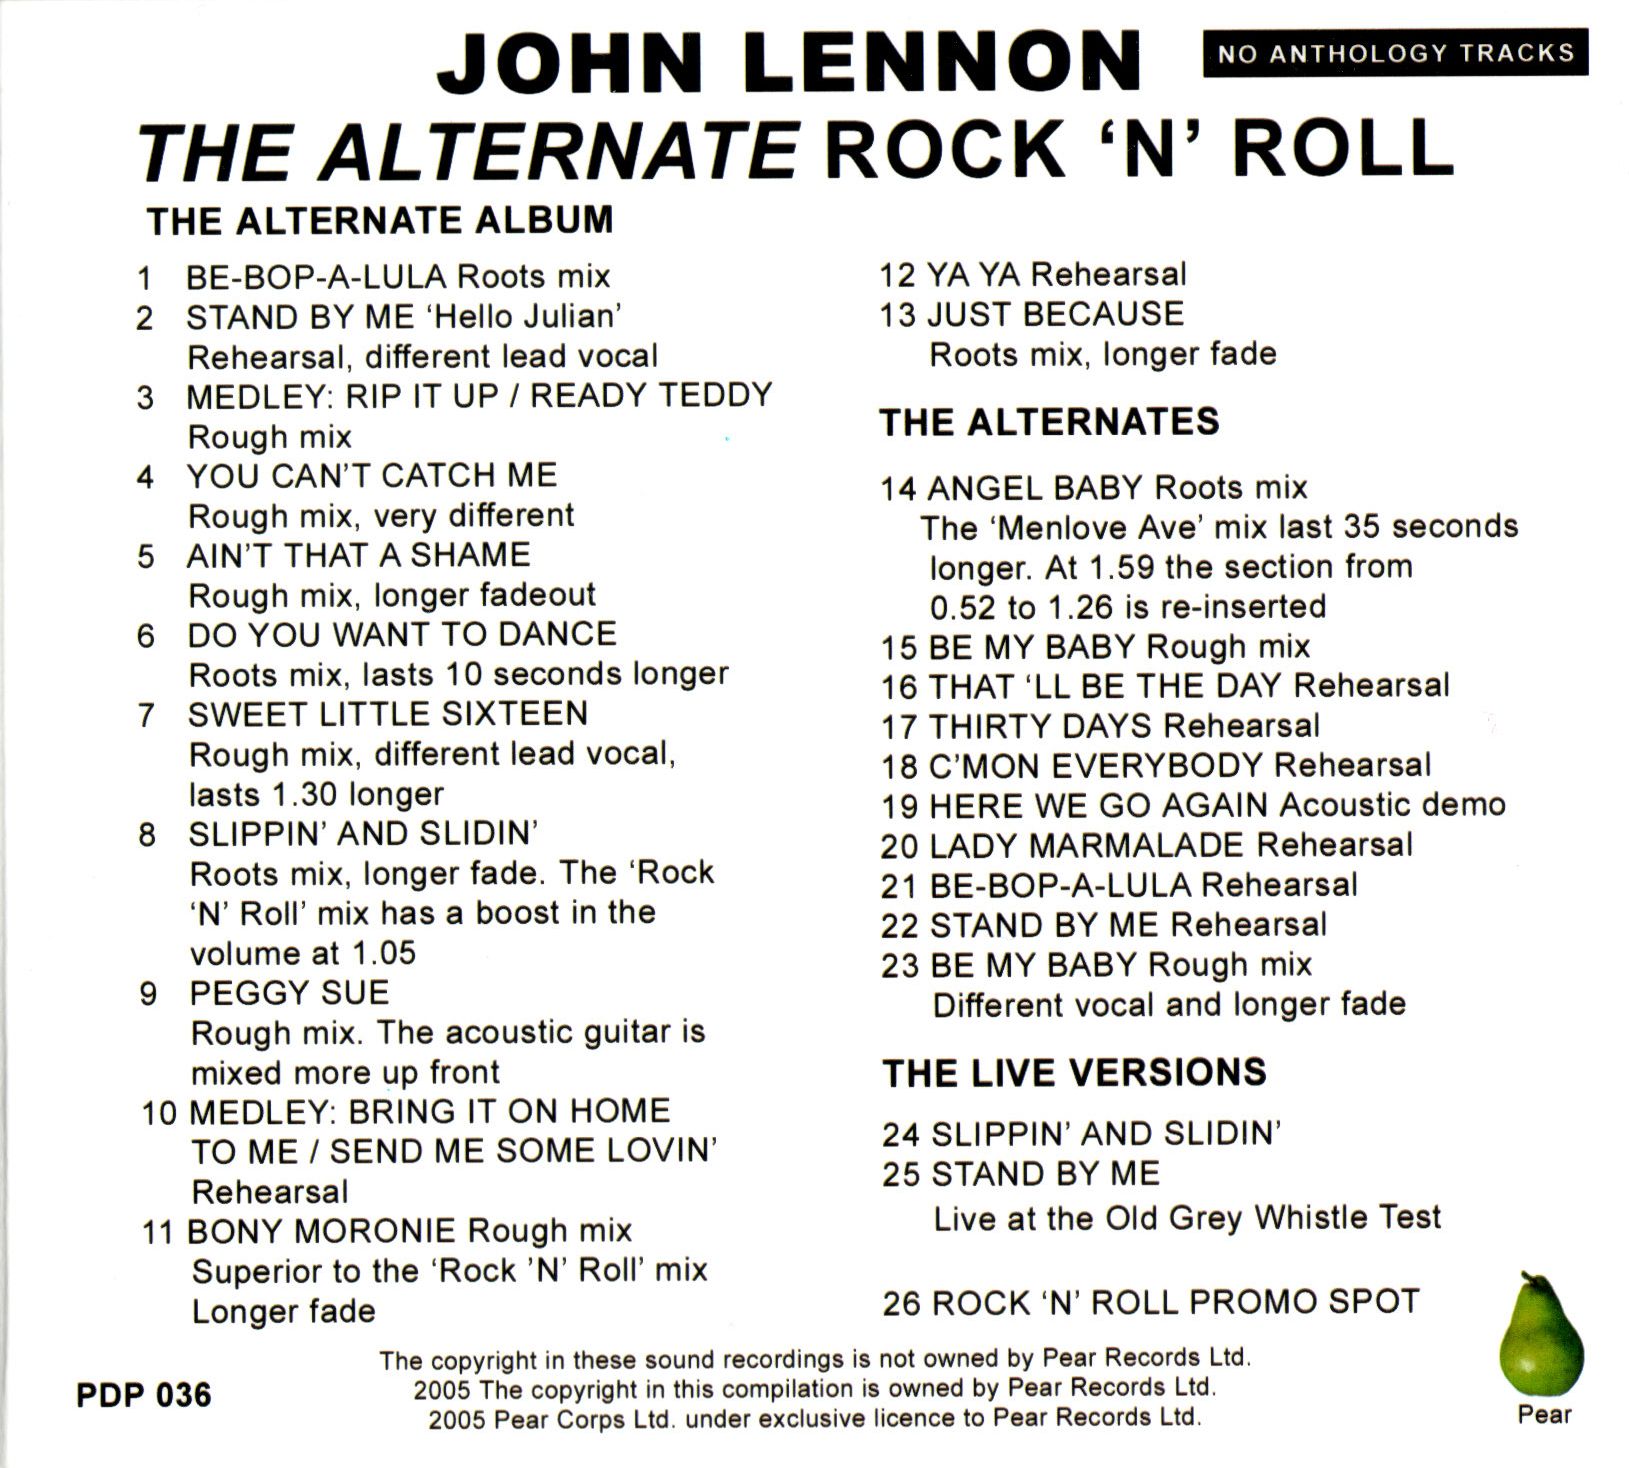 JohnLennon-AlternateRockNRoll (4).jpg